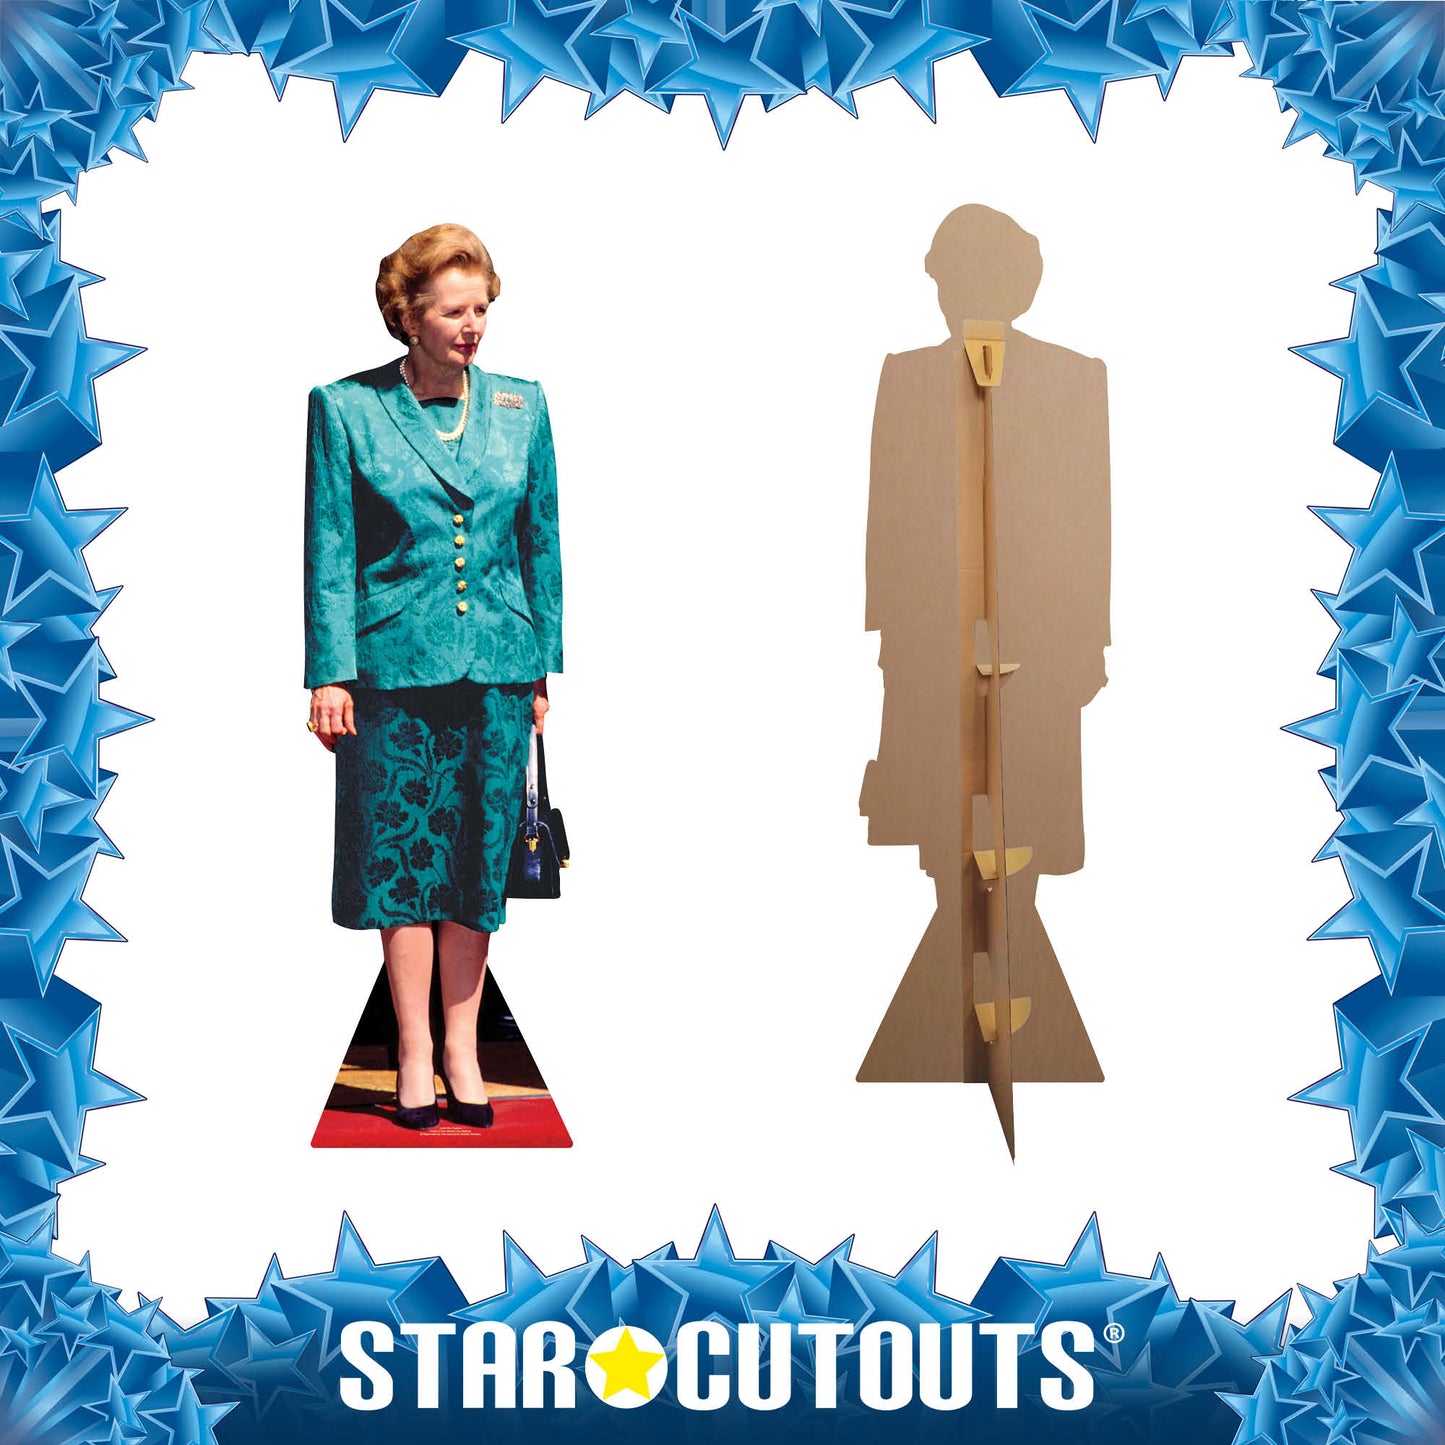 Margaret Thatcher Cardboard Cutout Politician